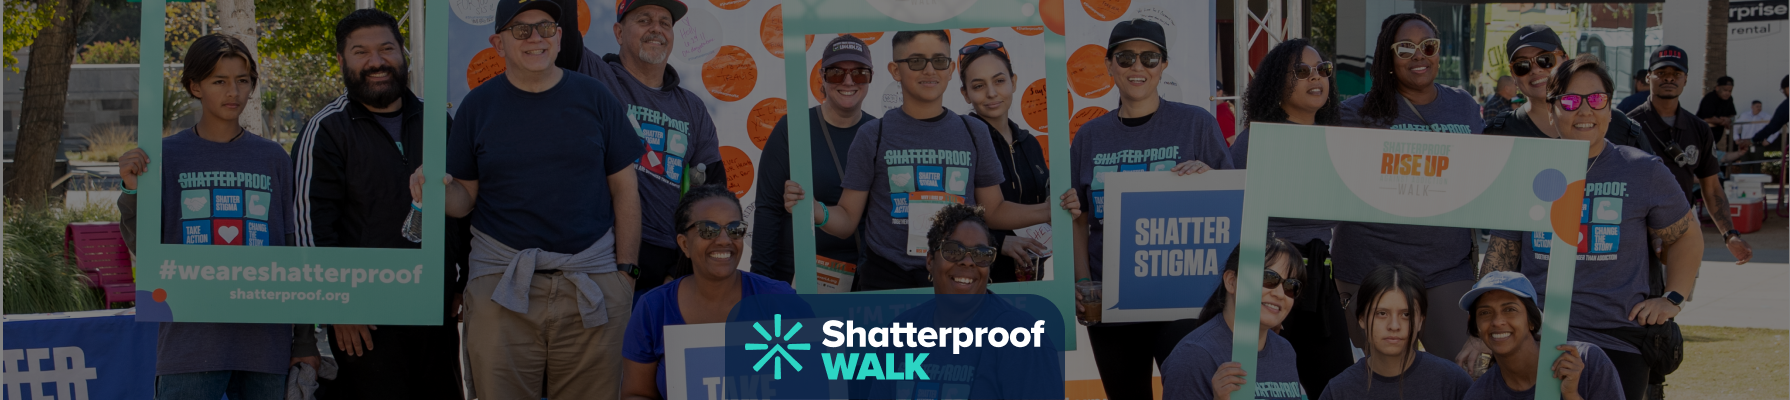 Shatterproof Walk Los Angeles